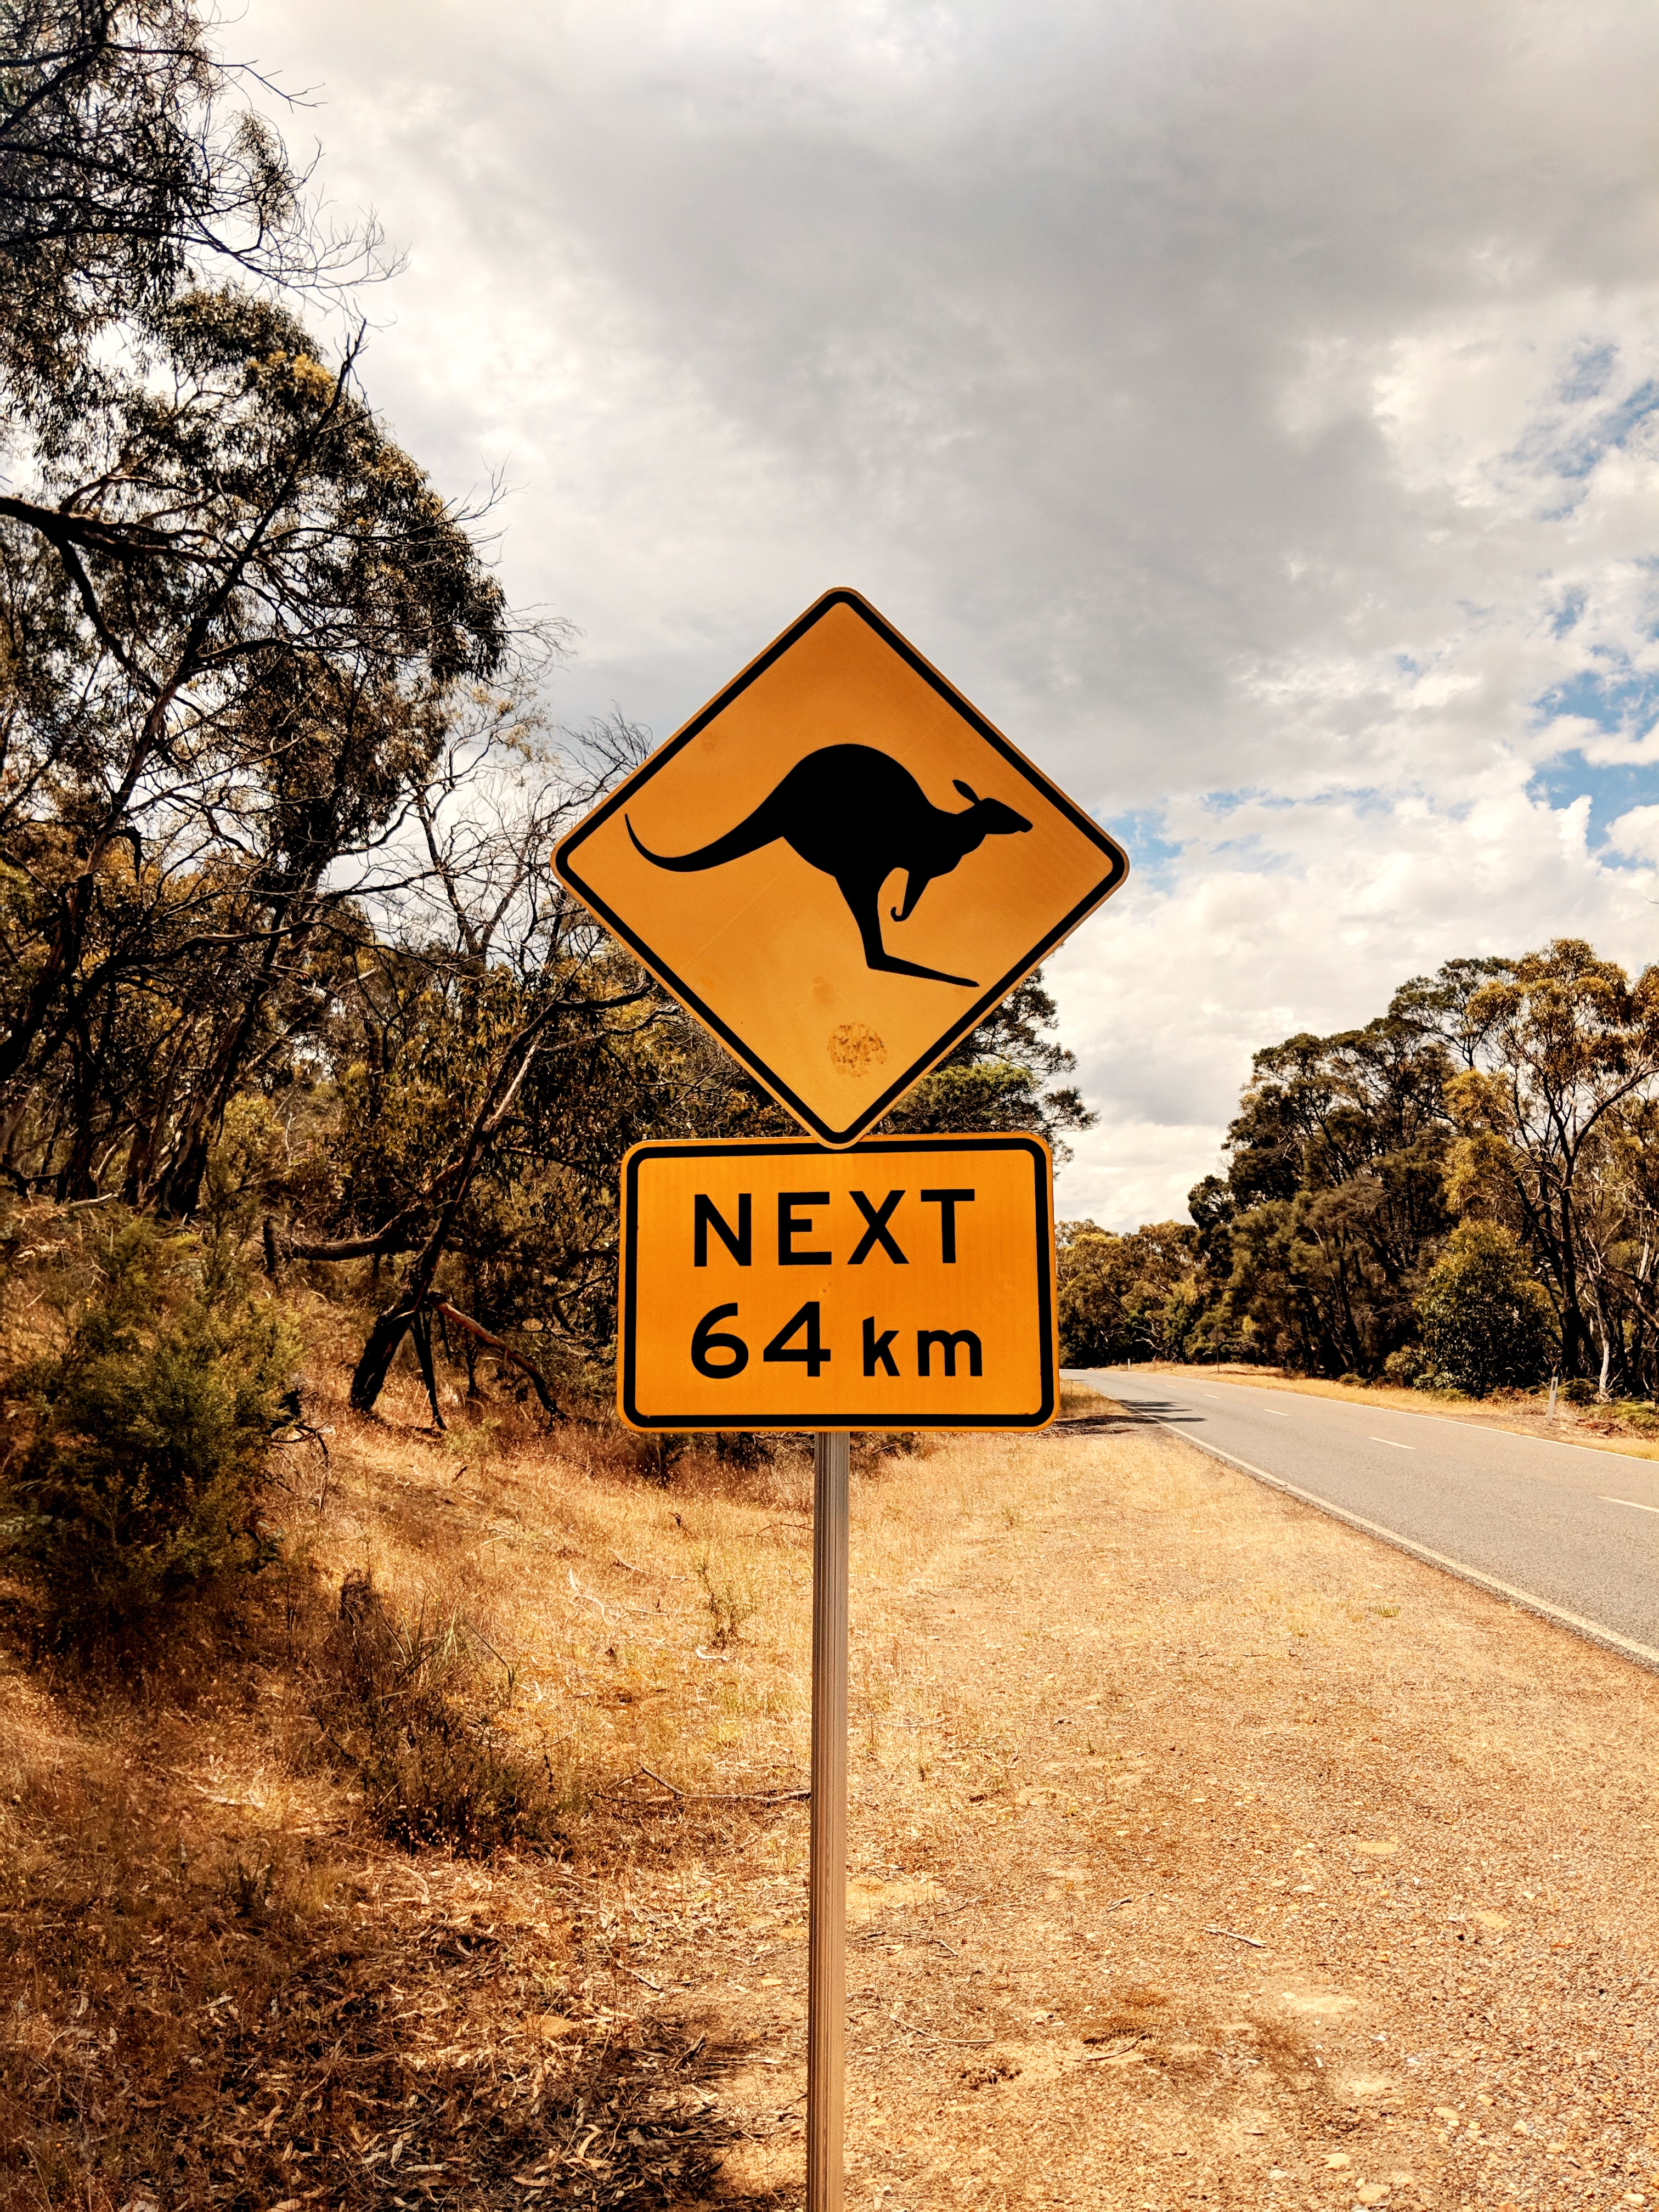 Popular Kangaroo Image for Phone